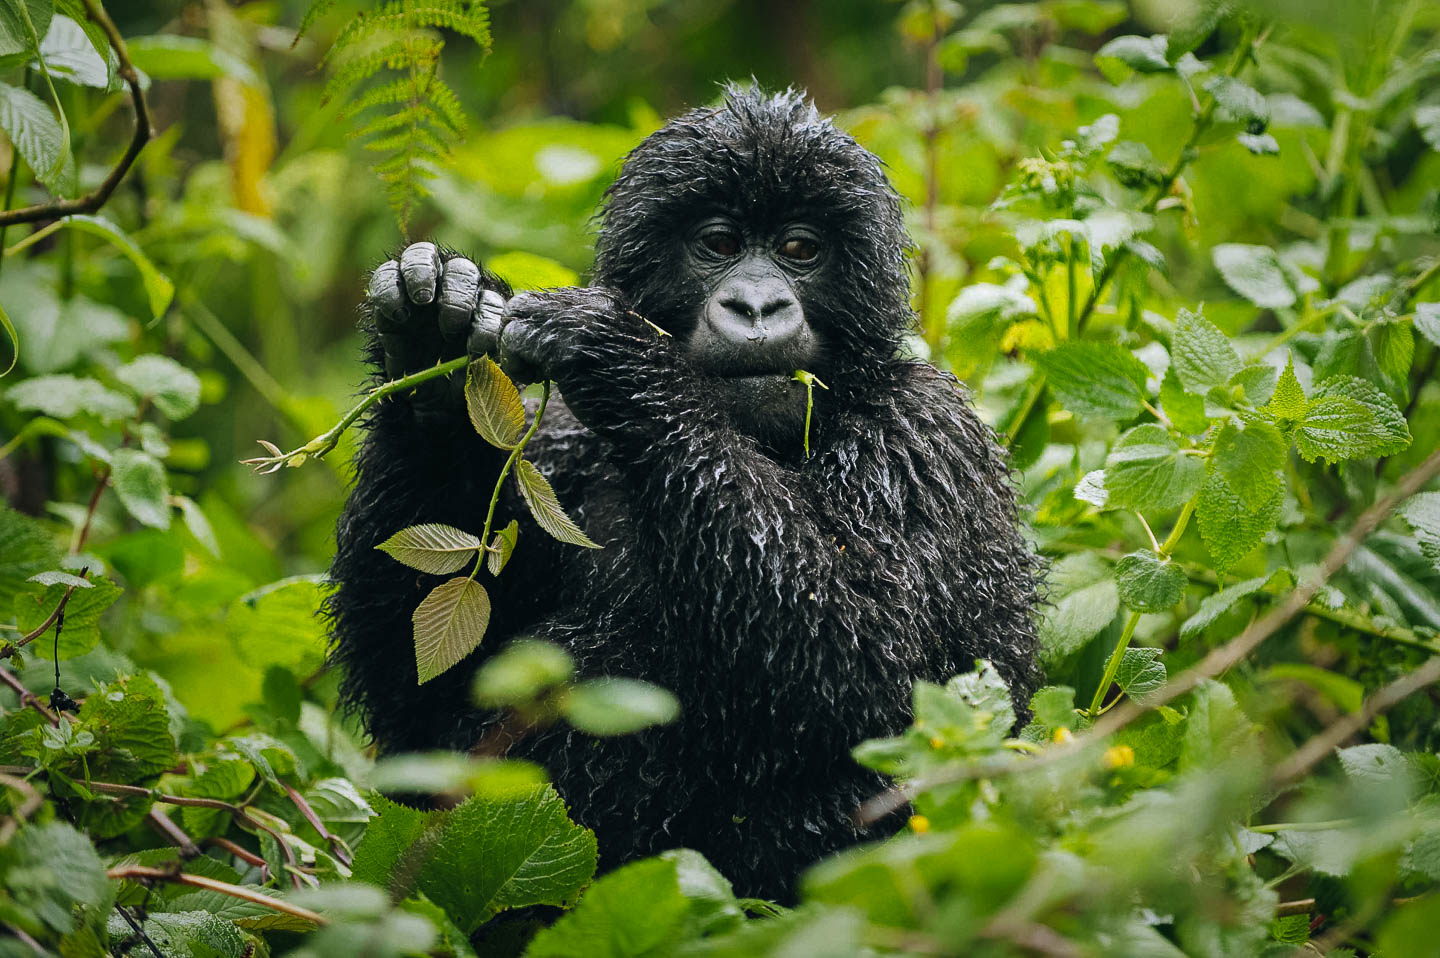 Why Are Gorillas Going Extinct?